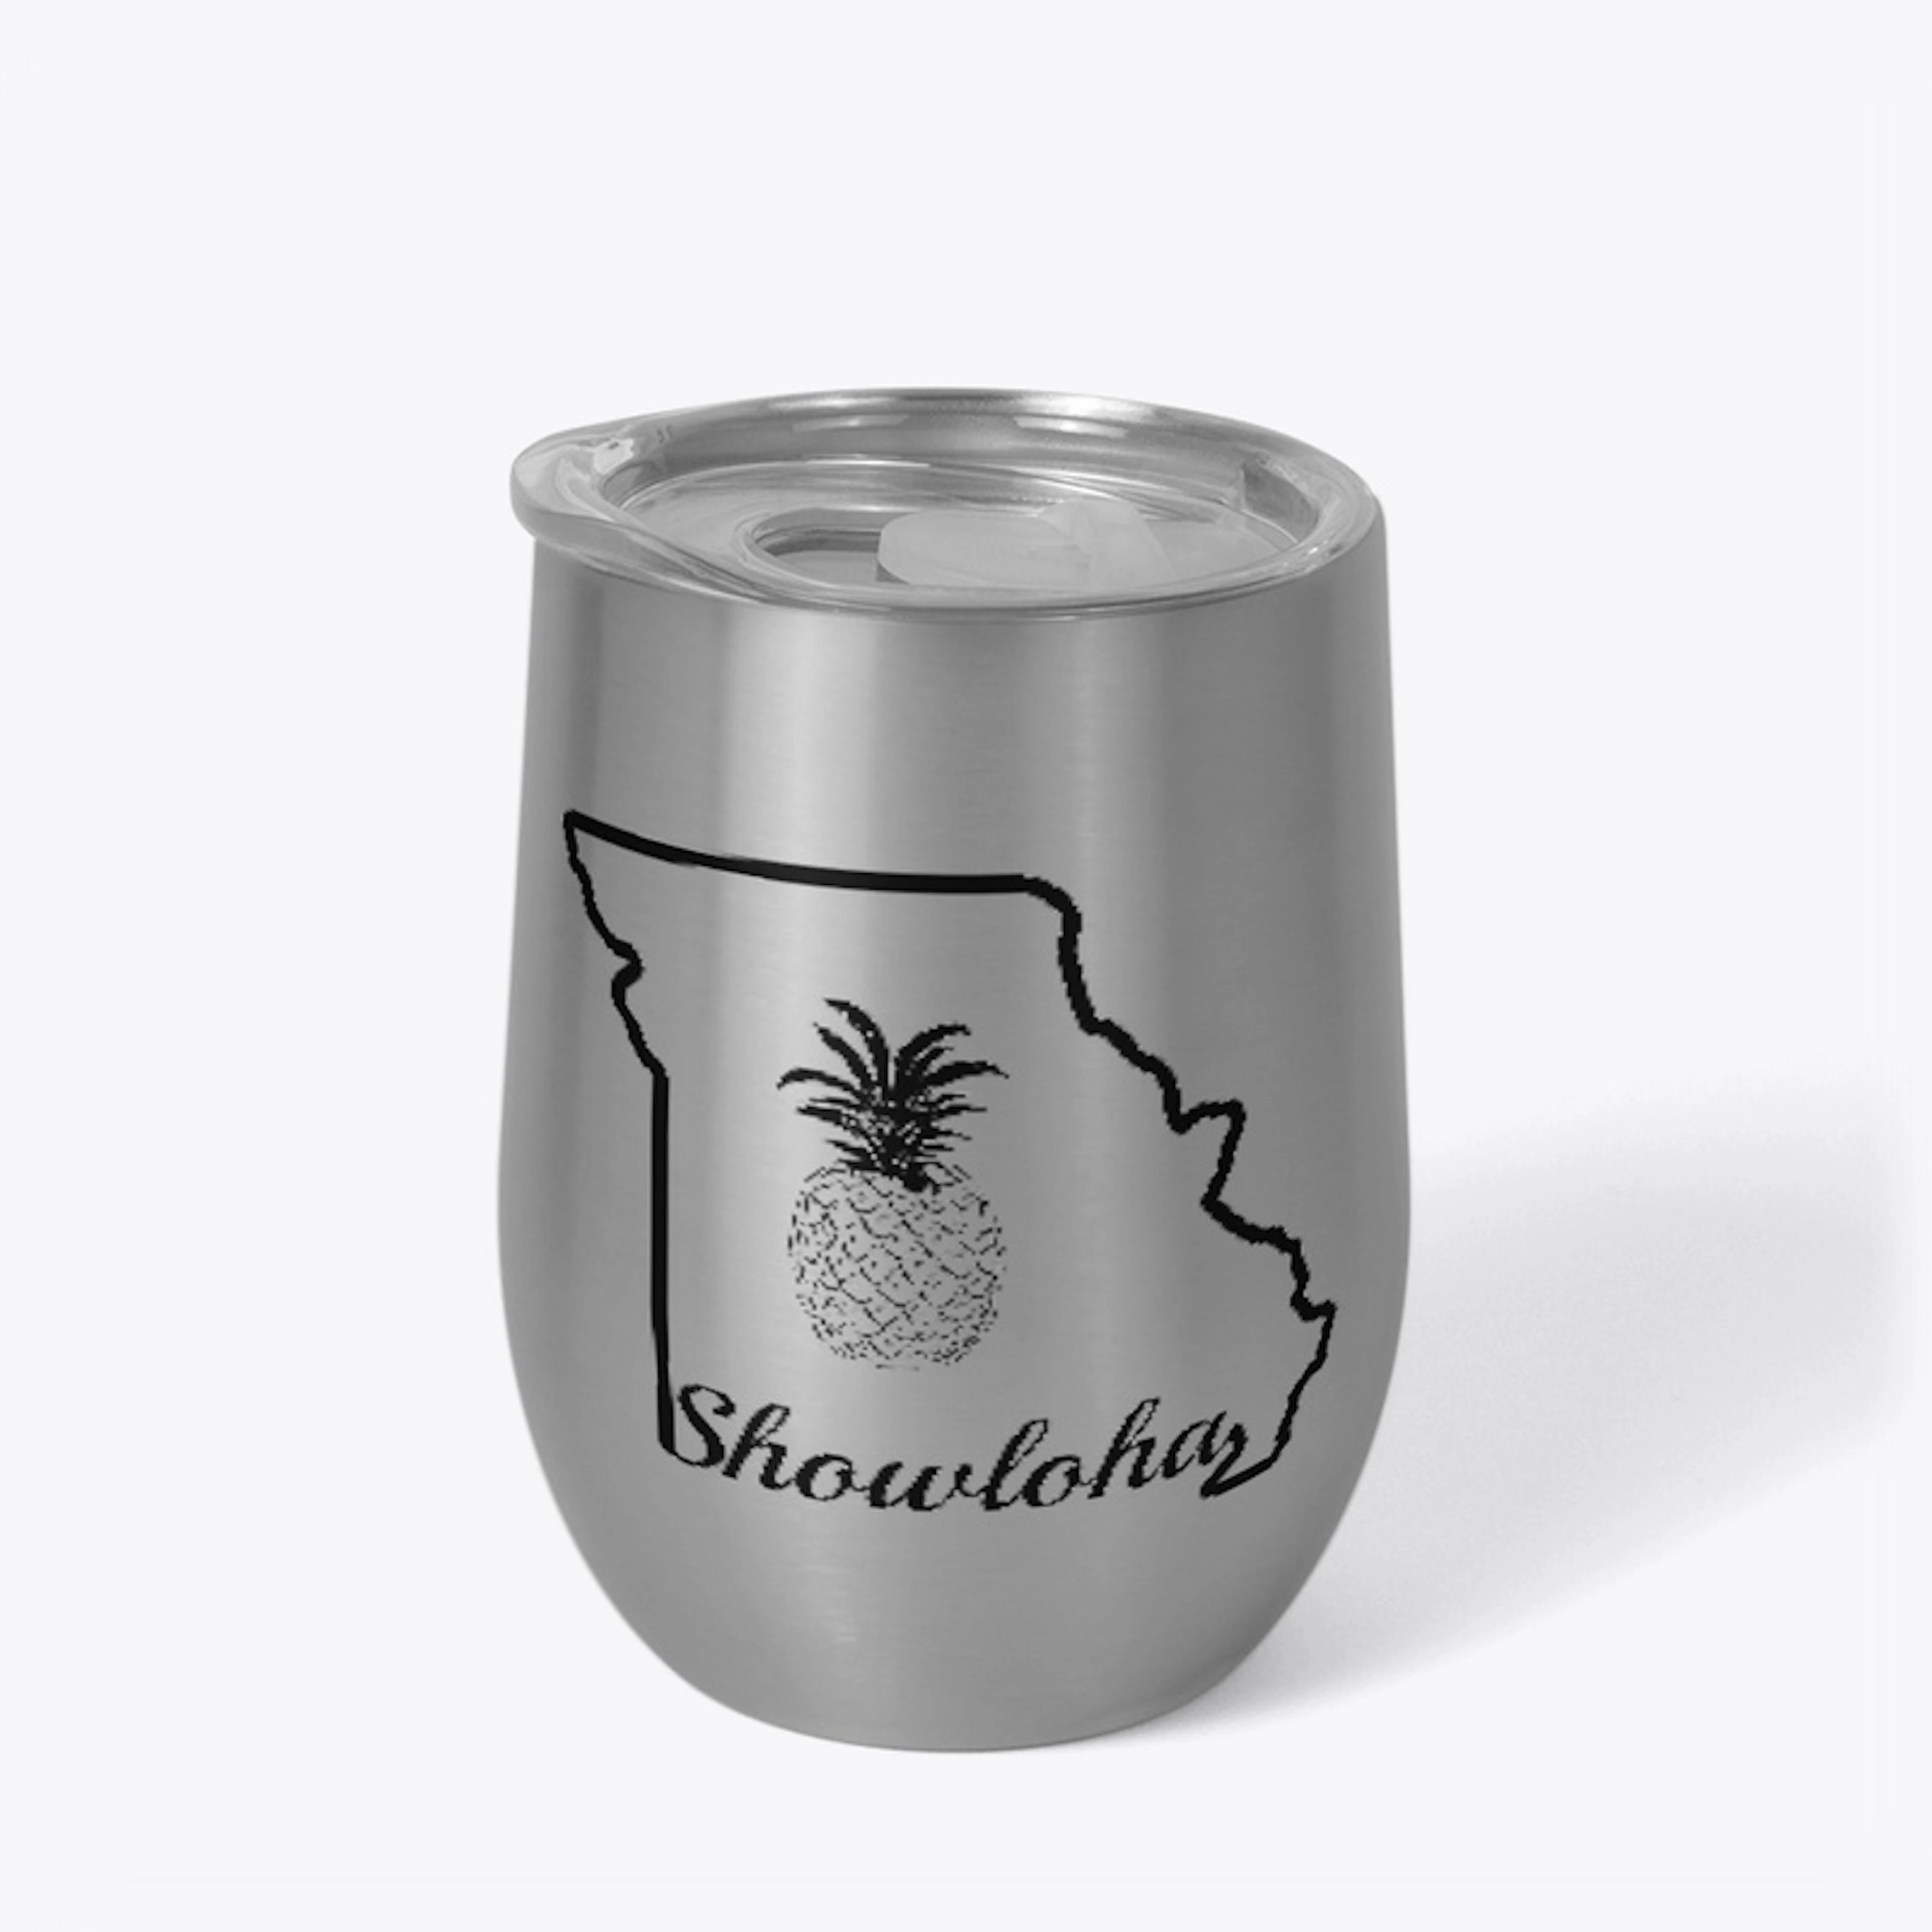 Showloha Drinkware